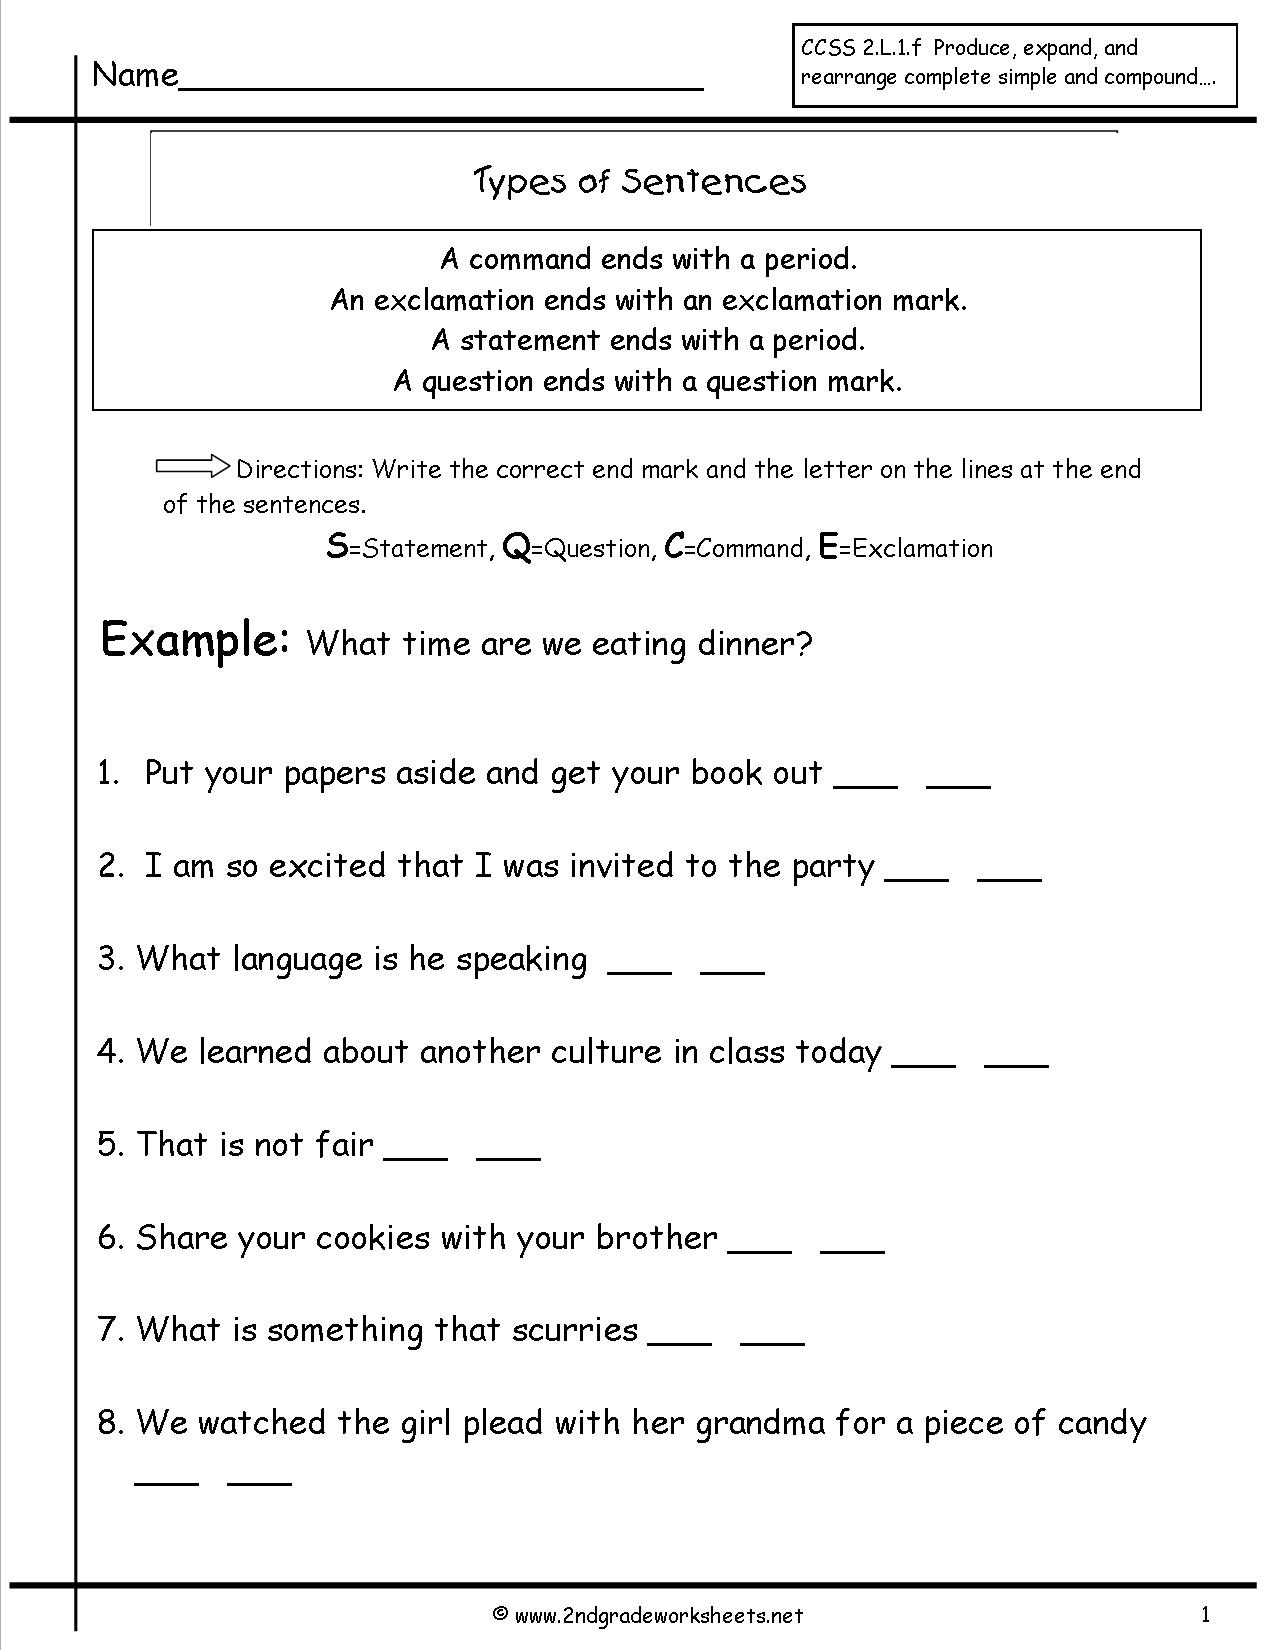 4 Types Of Sentences Free Worksheets